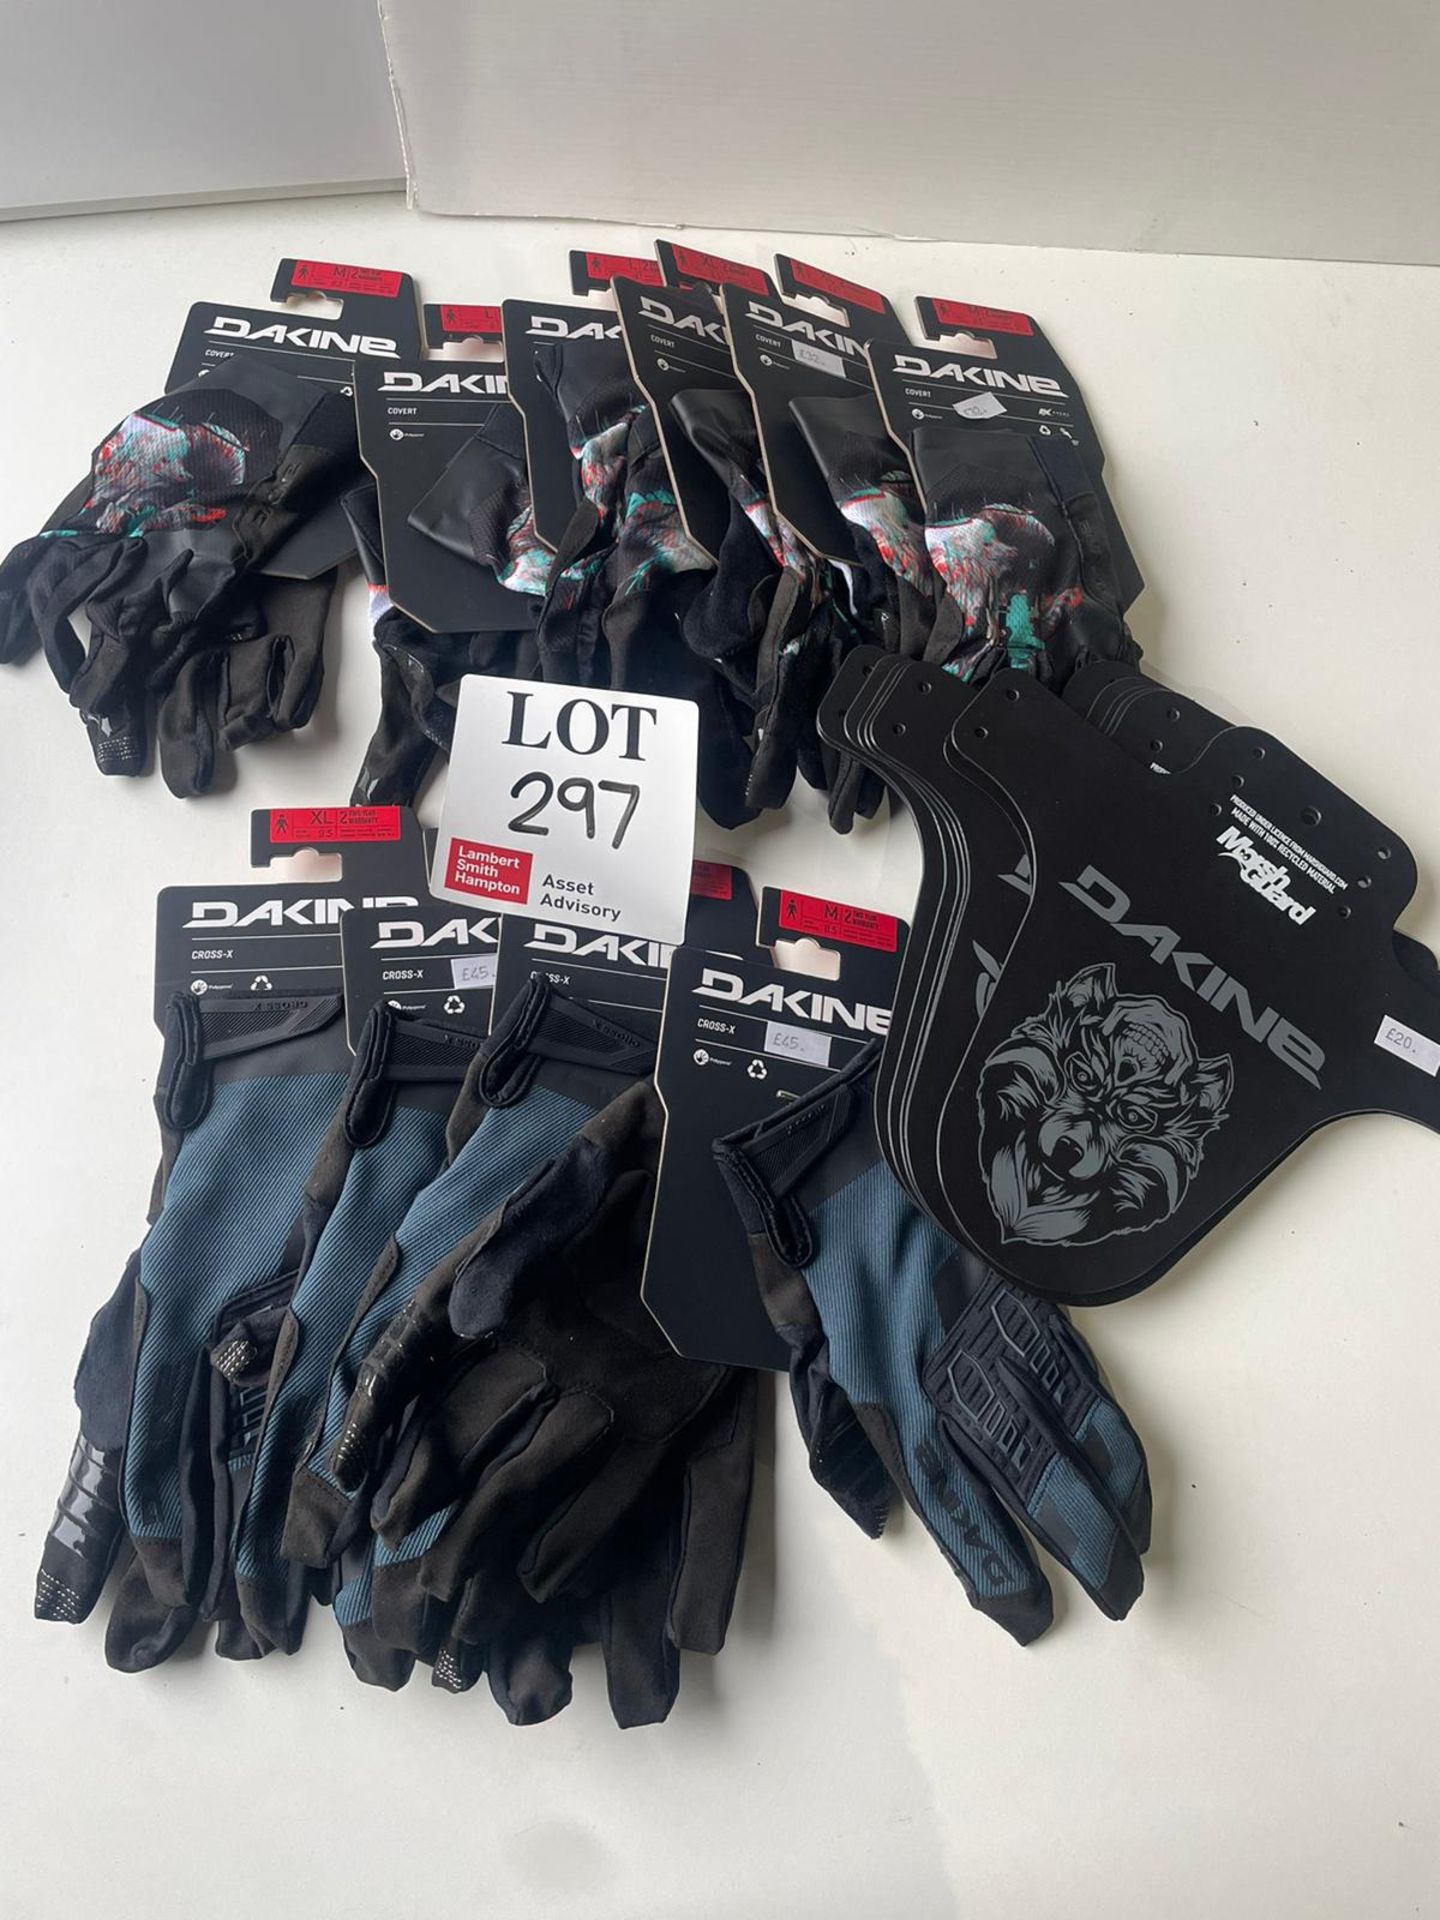 Ten Dakine assorted bike gloves and bike guards